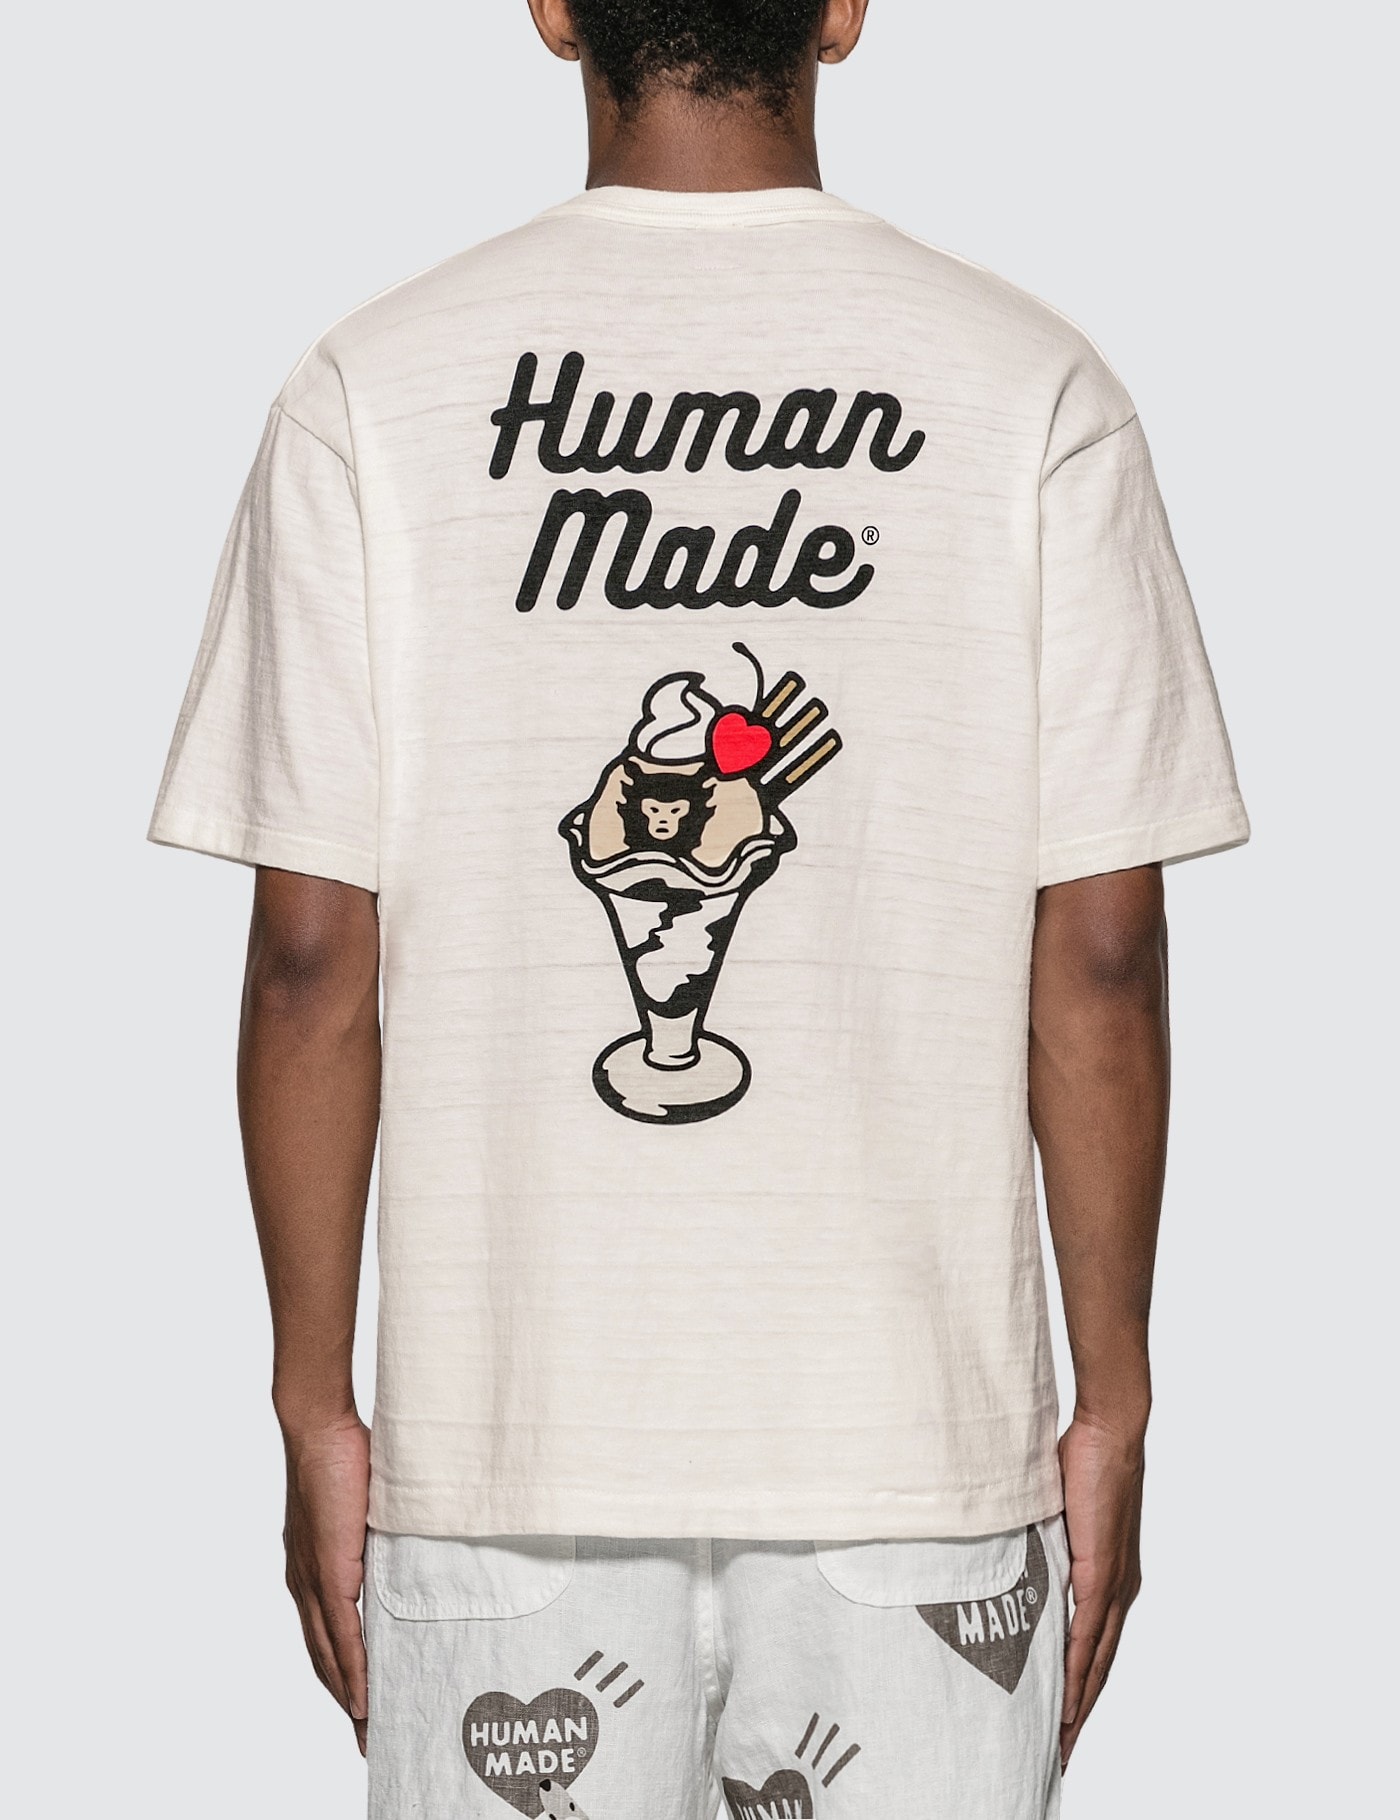 Human Made HBX 2020 New Releases nigo Stormy Cowboy Hearts Ducks Curry Up Tokyo Japan Fashion Streetwear HBX